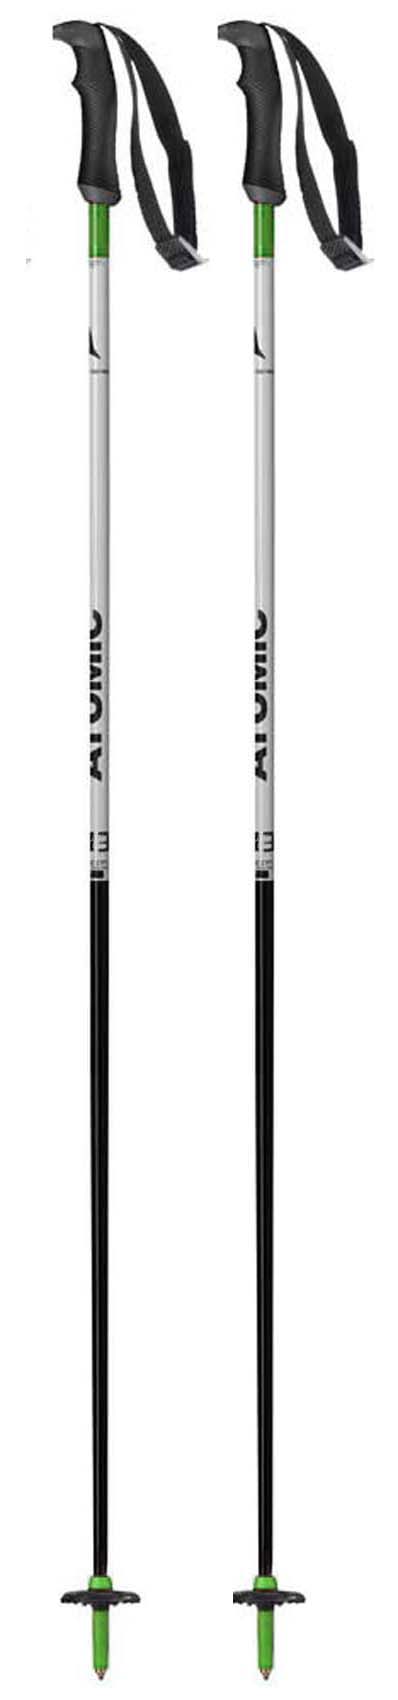 Atomic 2021 Composite Rental Adult Ski Poles NEW !! 135mm